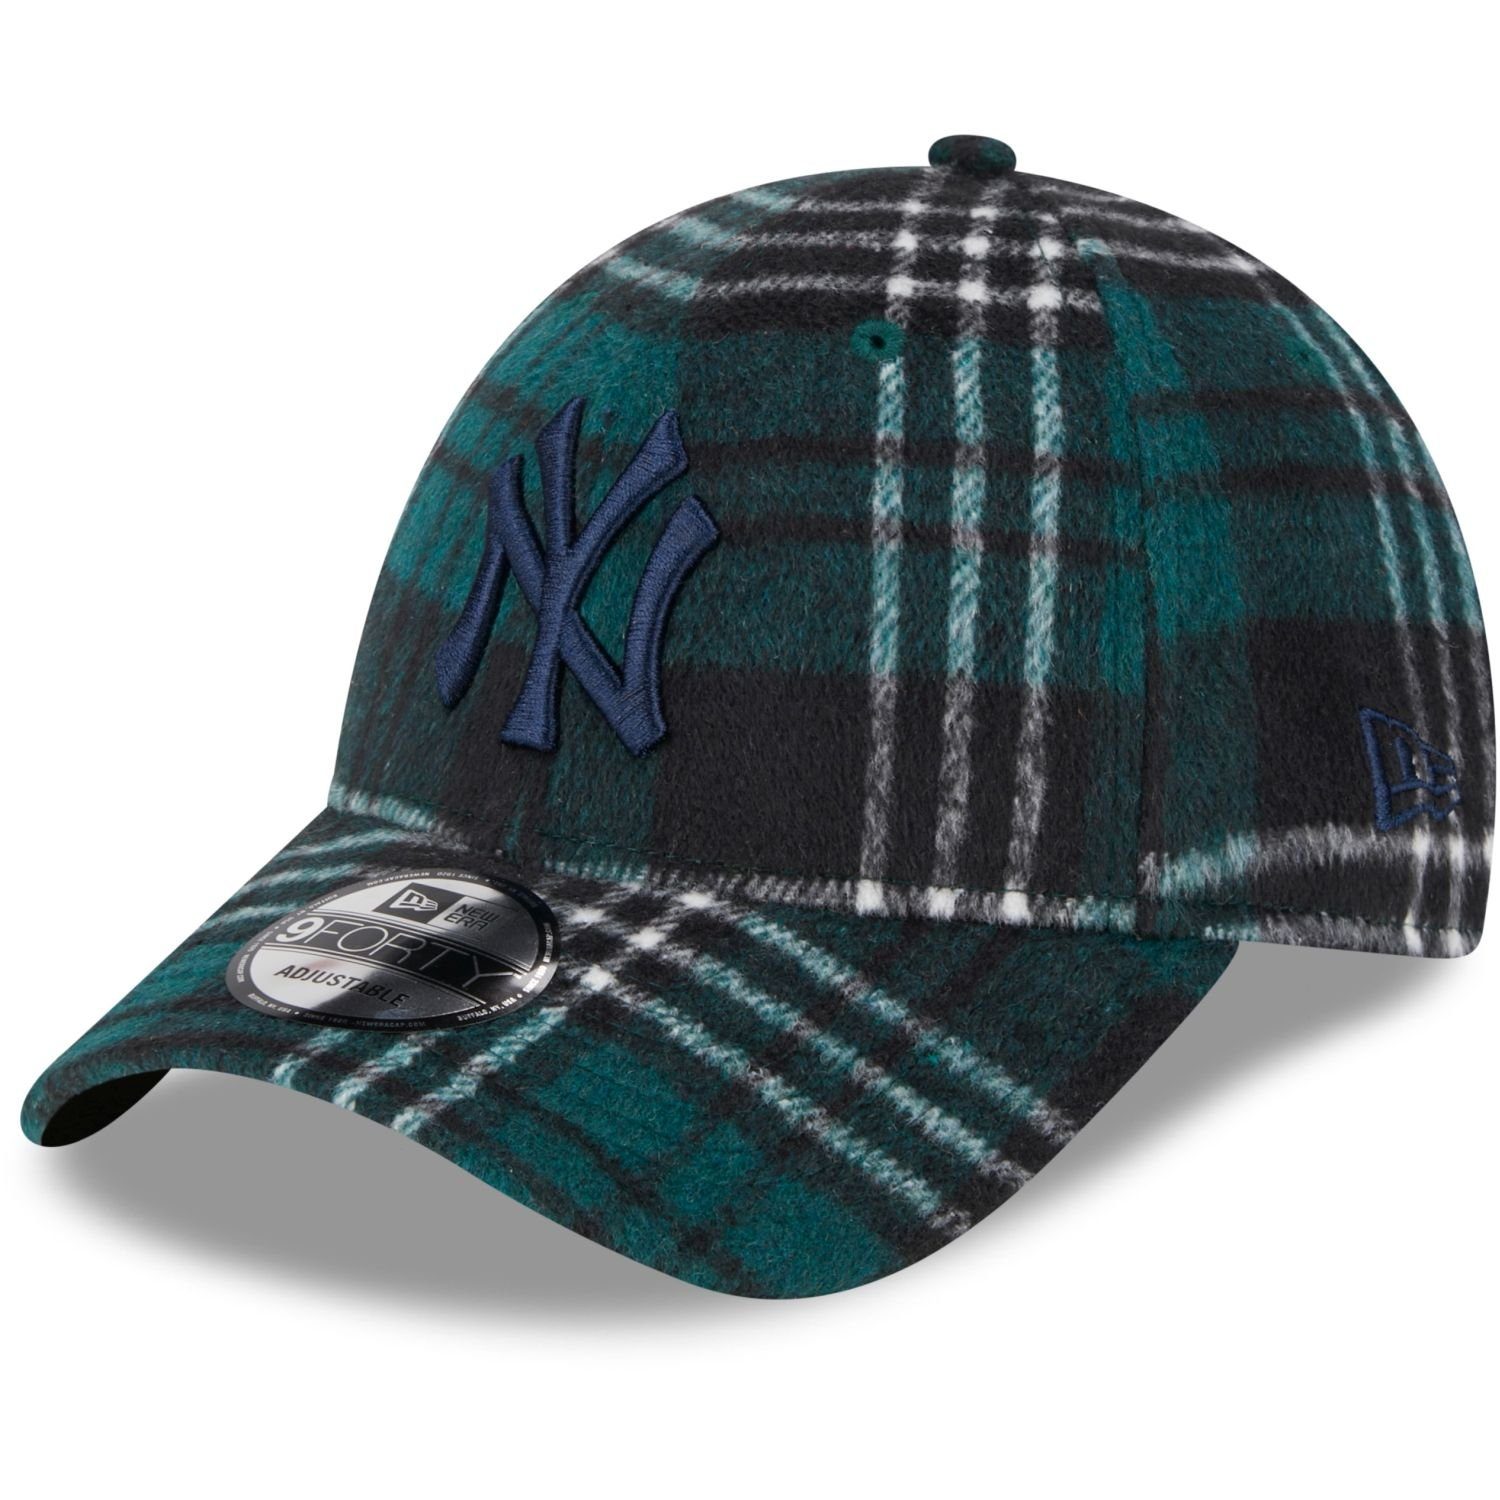 New New Cap Strapback Baseball Era GLEN 9Forty Yankees York CHECK